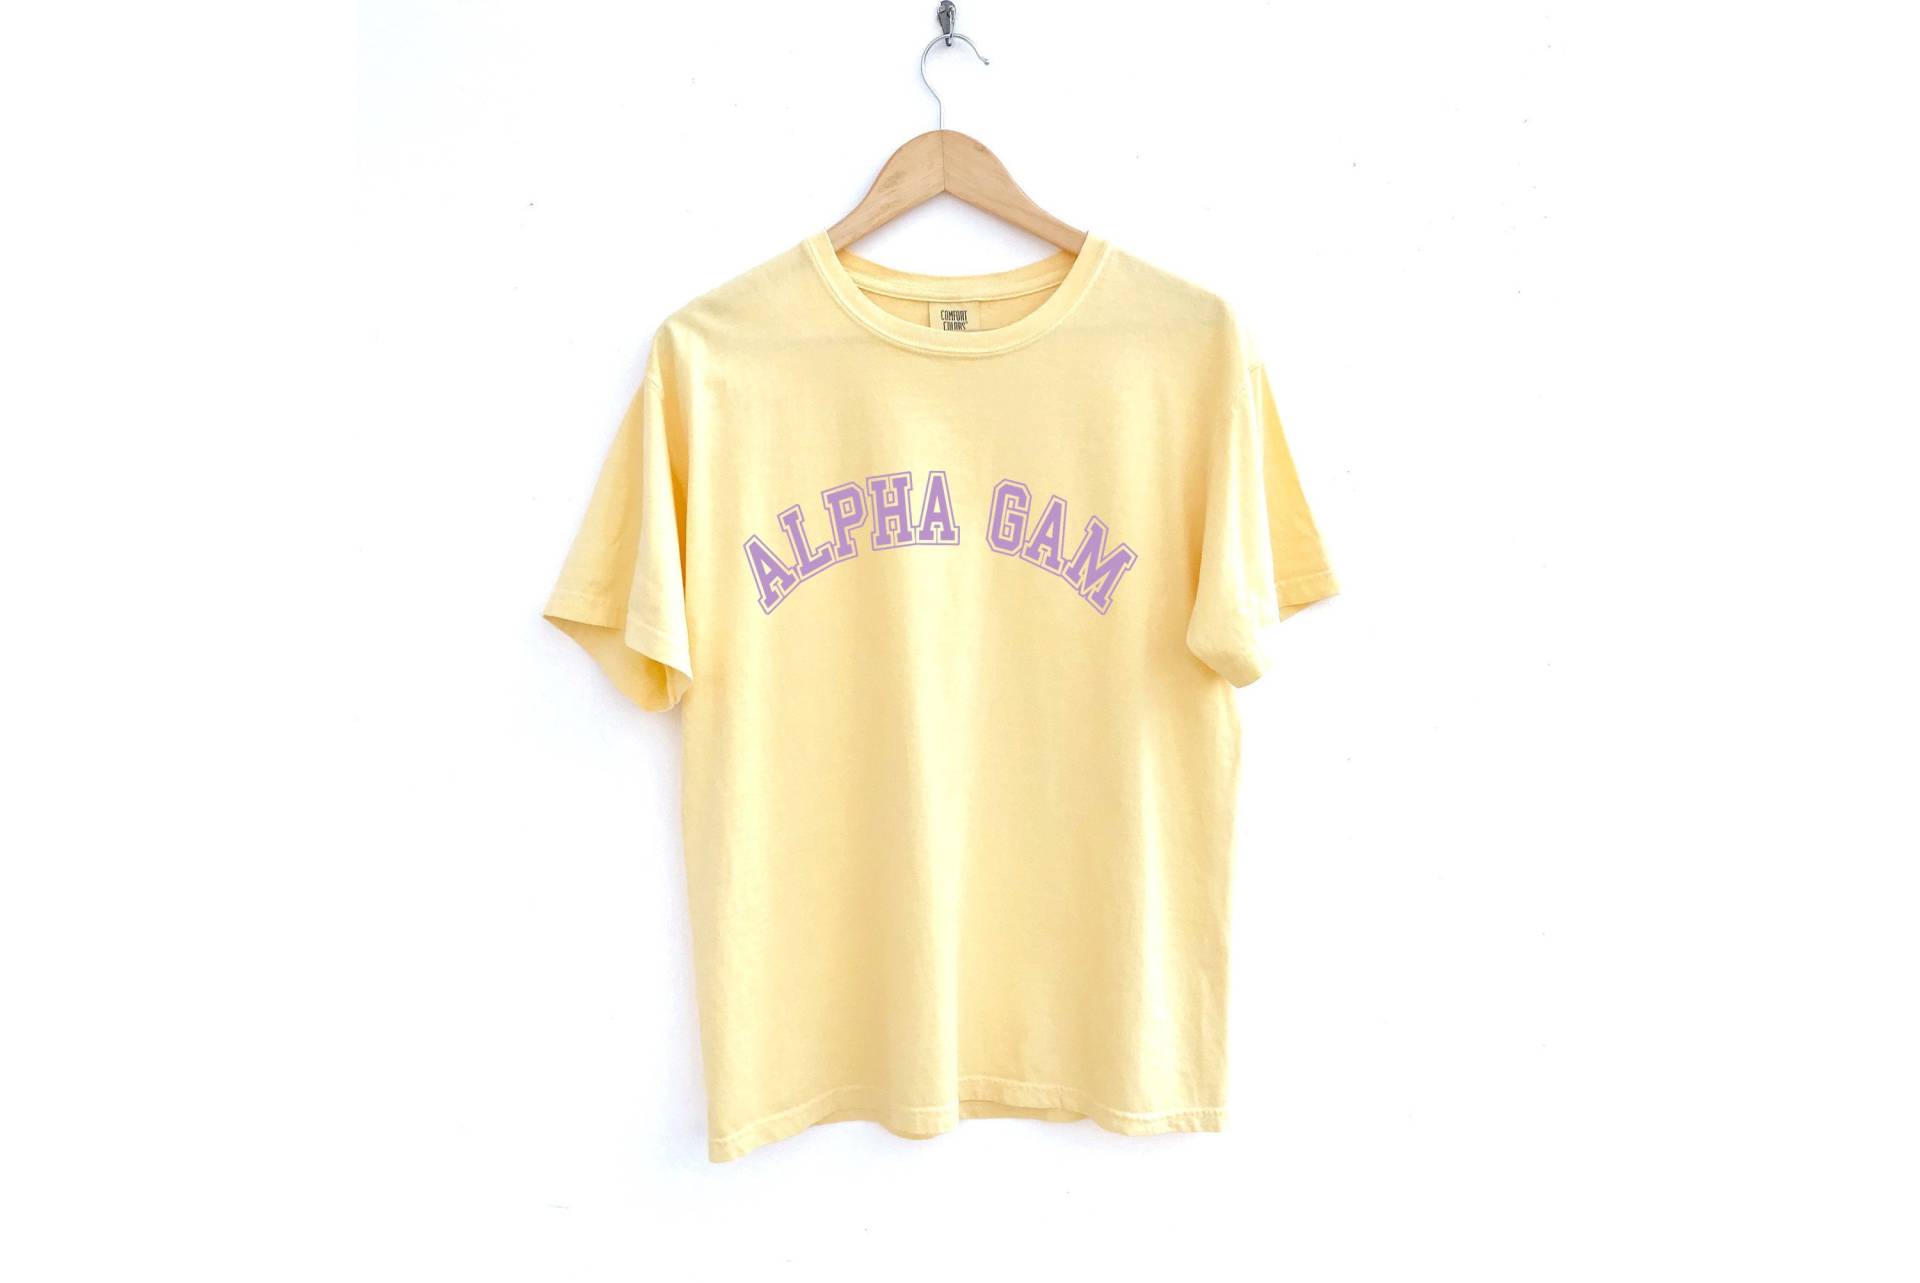 Alpha-Alpha-Delta - Lila-stehbogen-Sororitätsshirt Comfort Colors Butter von MadebyMollzShop